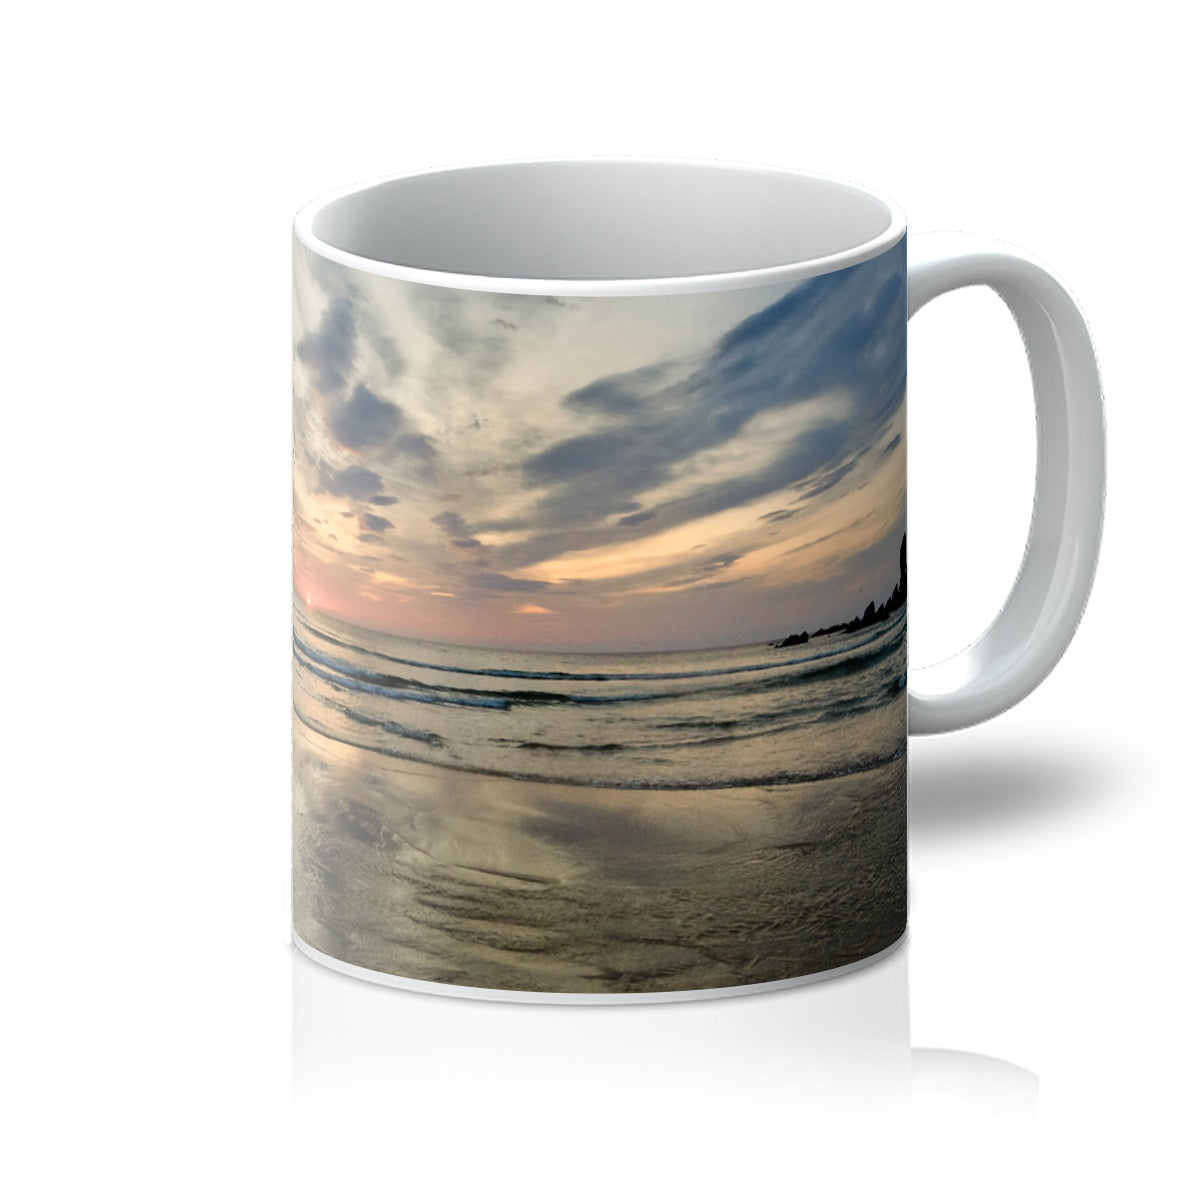 Dalmore Beach Sunset Mug